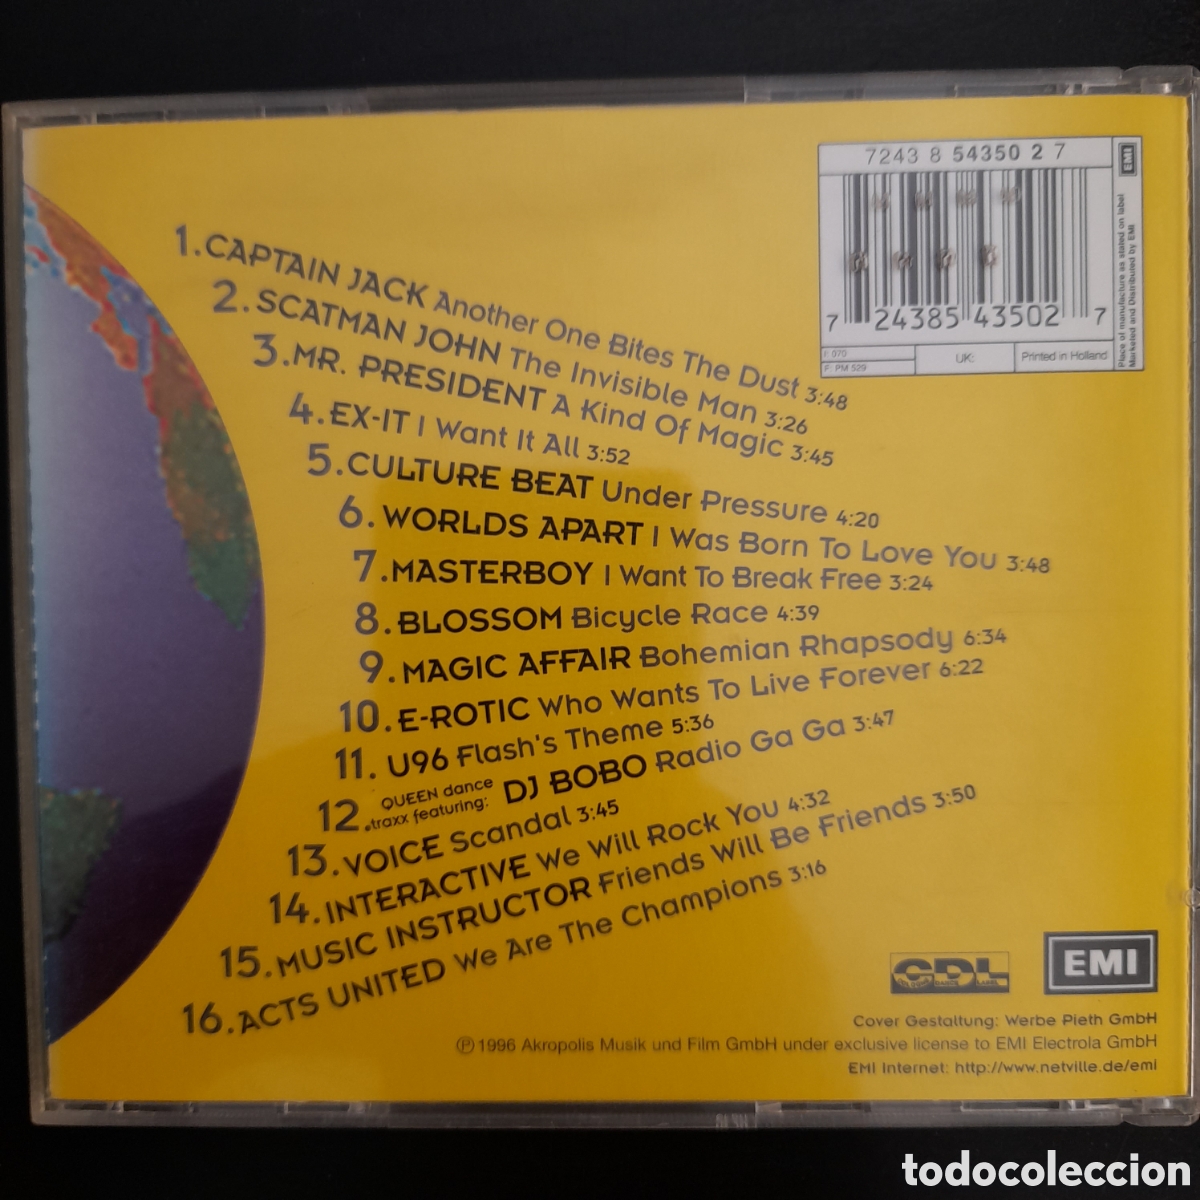 Various, Queen Dance Traxx I, CD (Album)